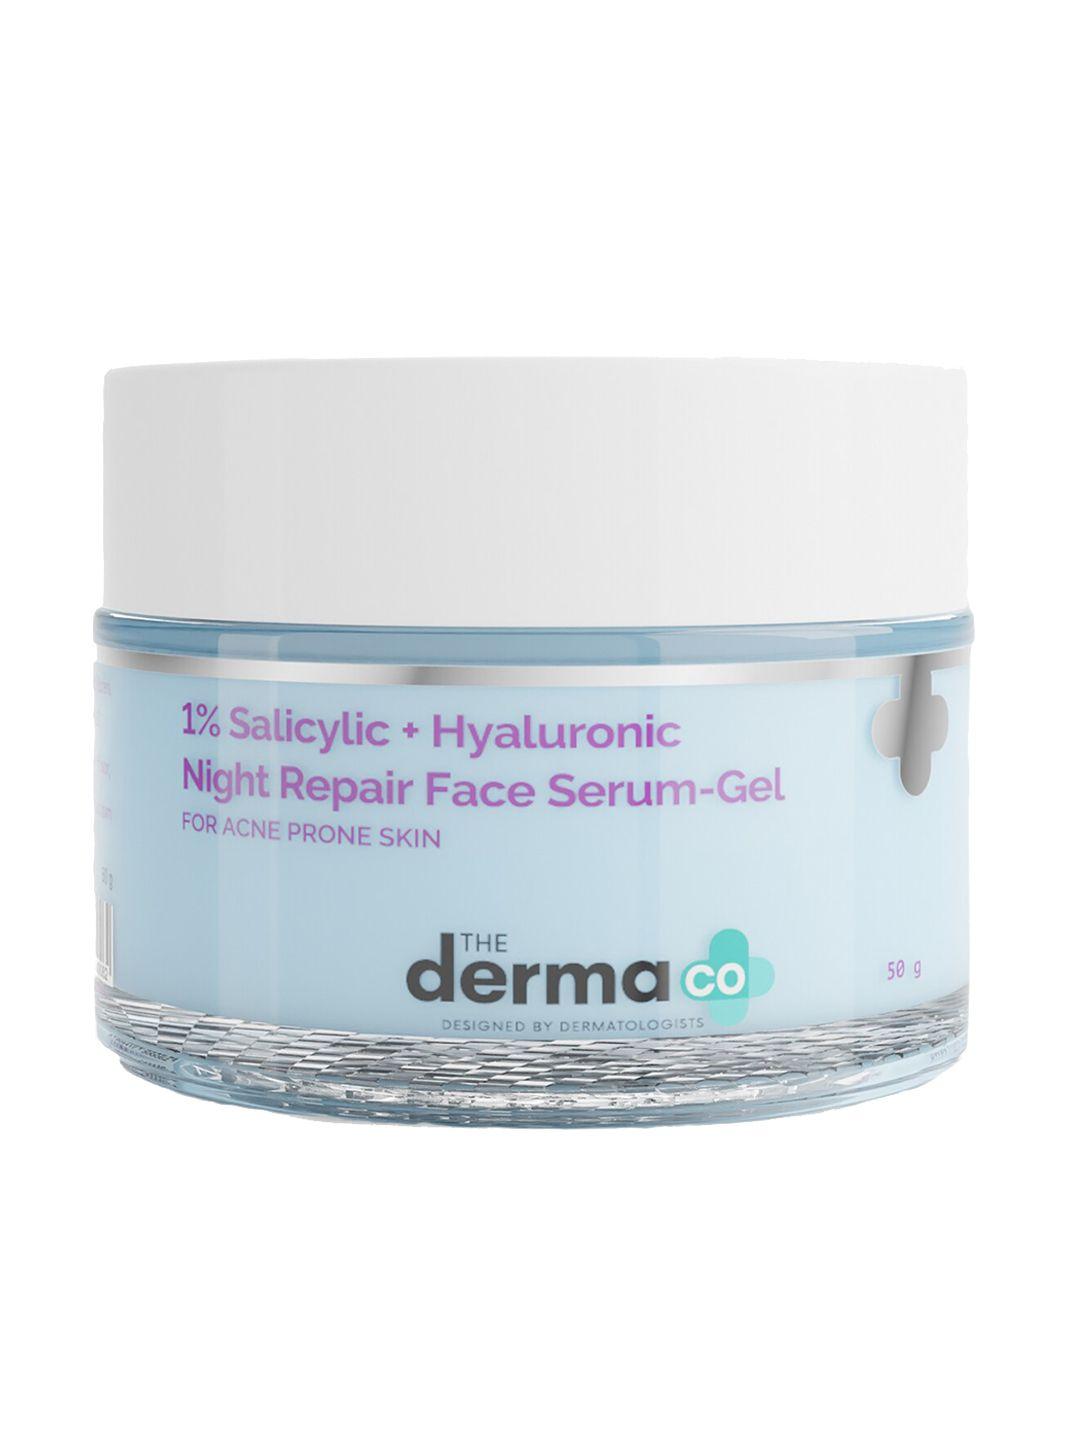 the derma co. 1% salicylic+hyaluronic night repair face serum-gel for acne prone skin-50g